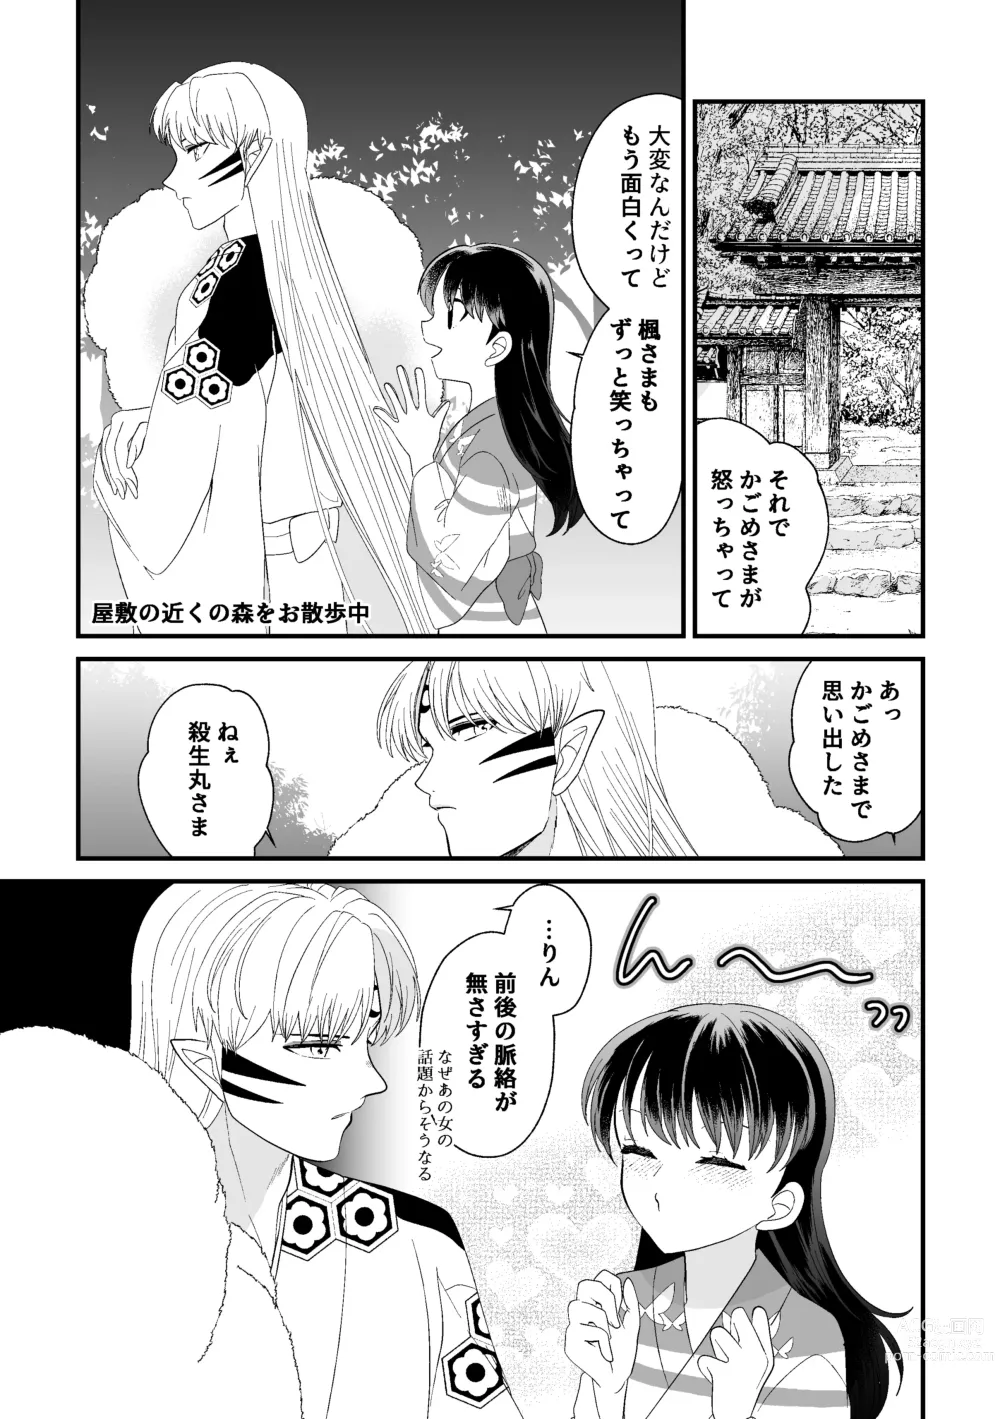 Page 5 of doujinshi Tatoe Sekai ga Chigatte mo